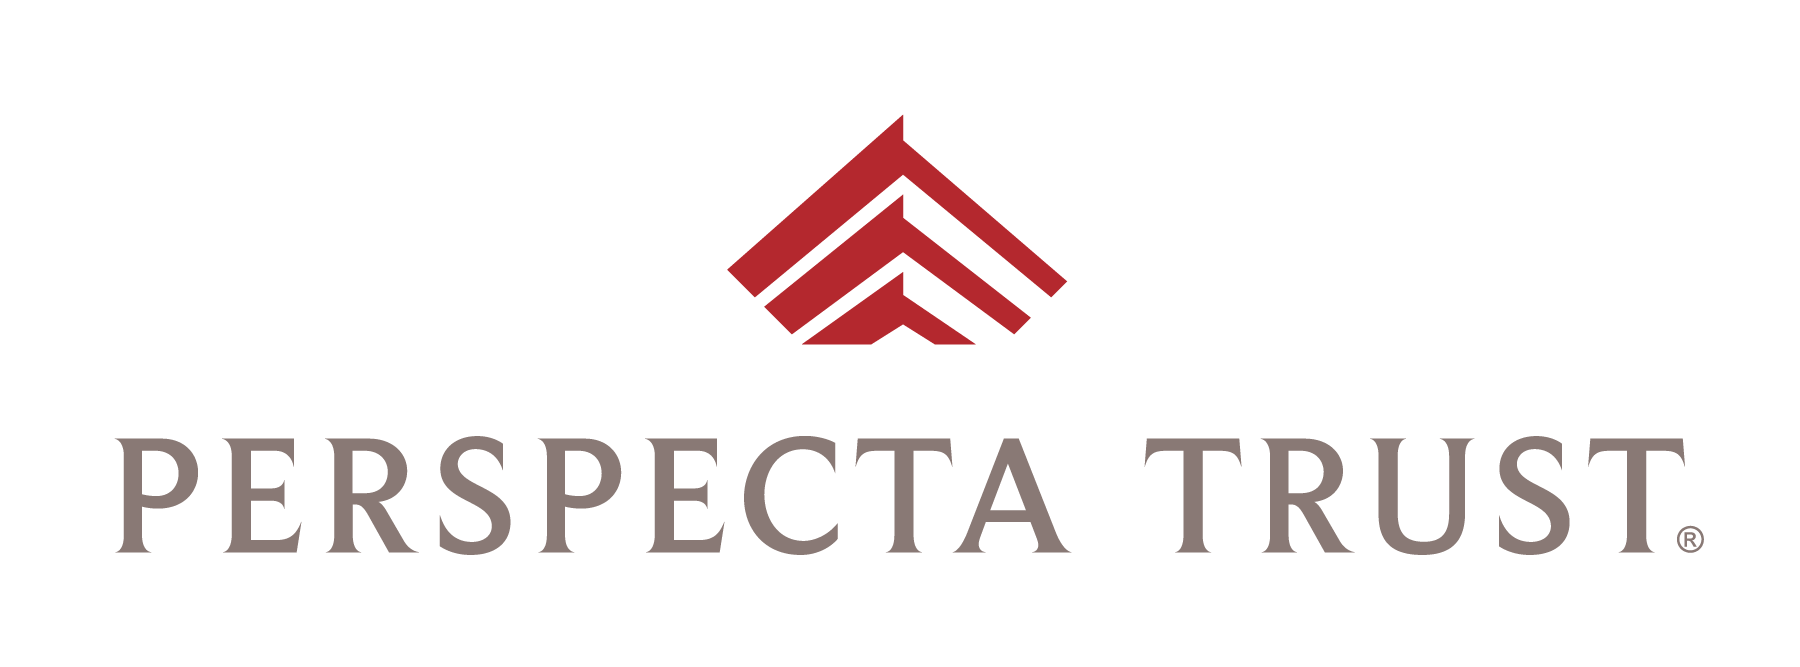 Perspecta Trust Name